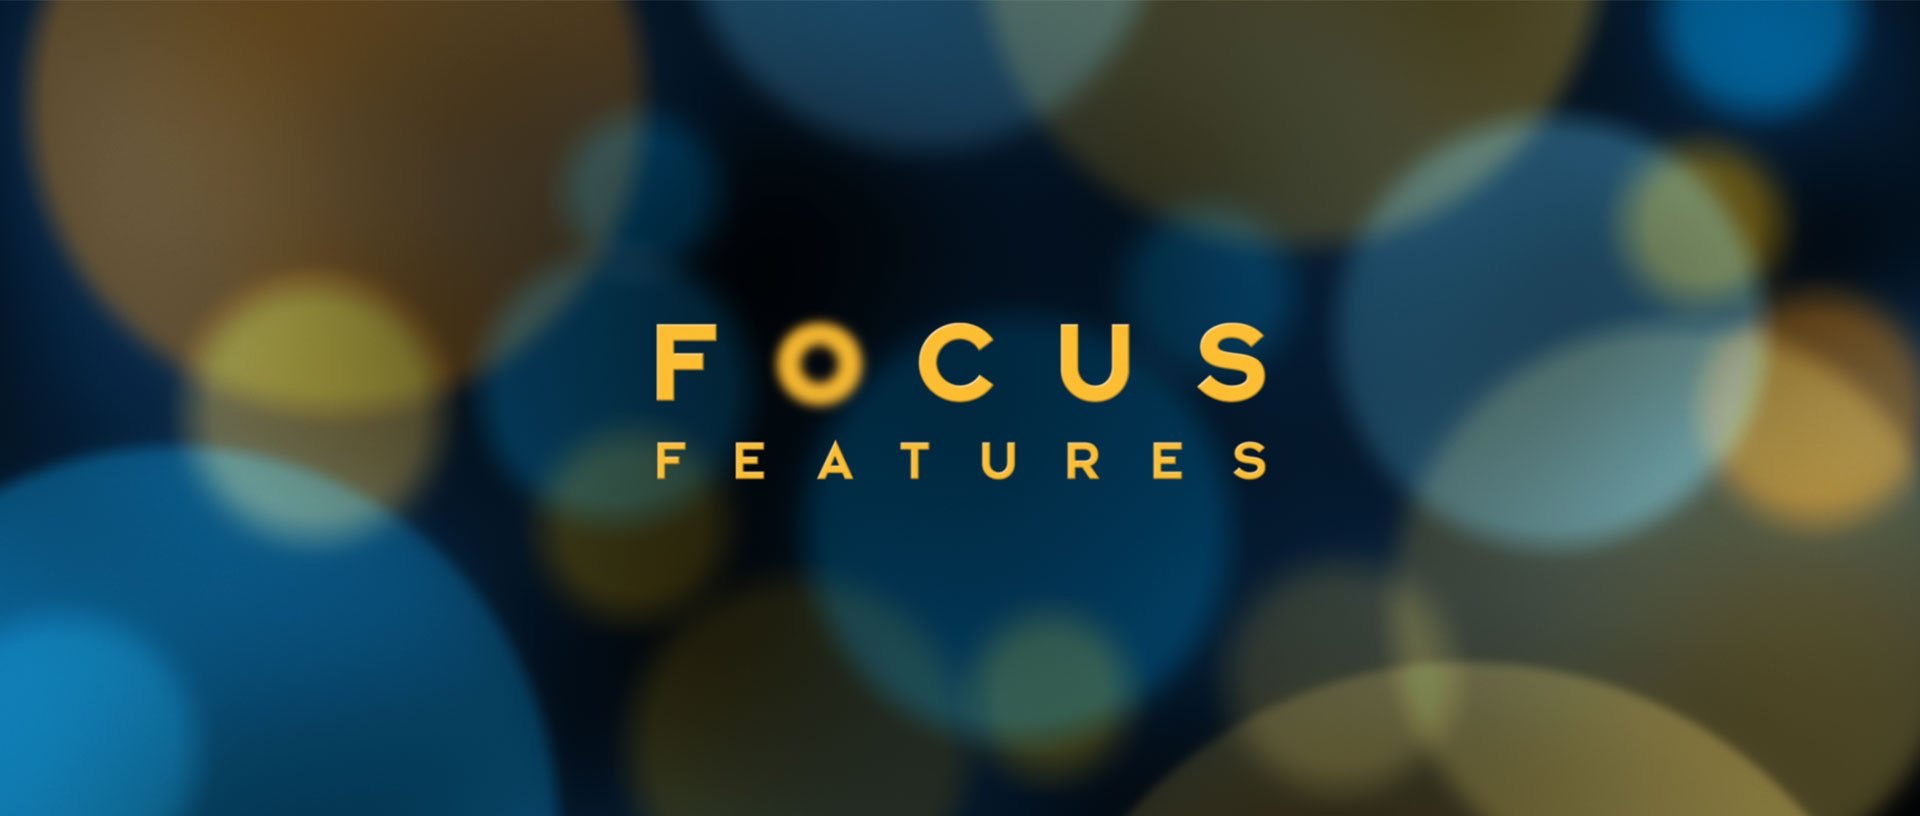 Focus 2.jpeg